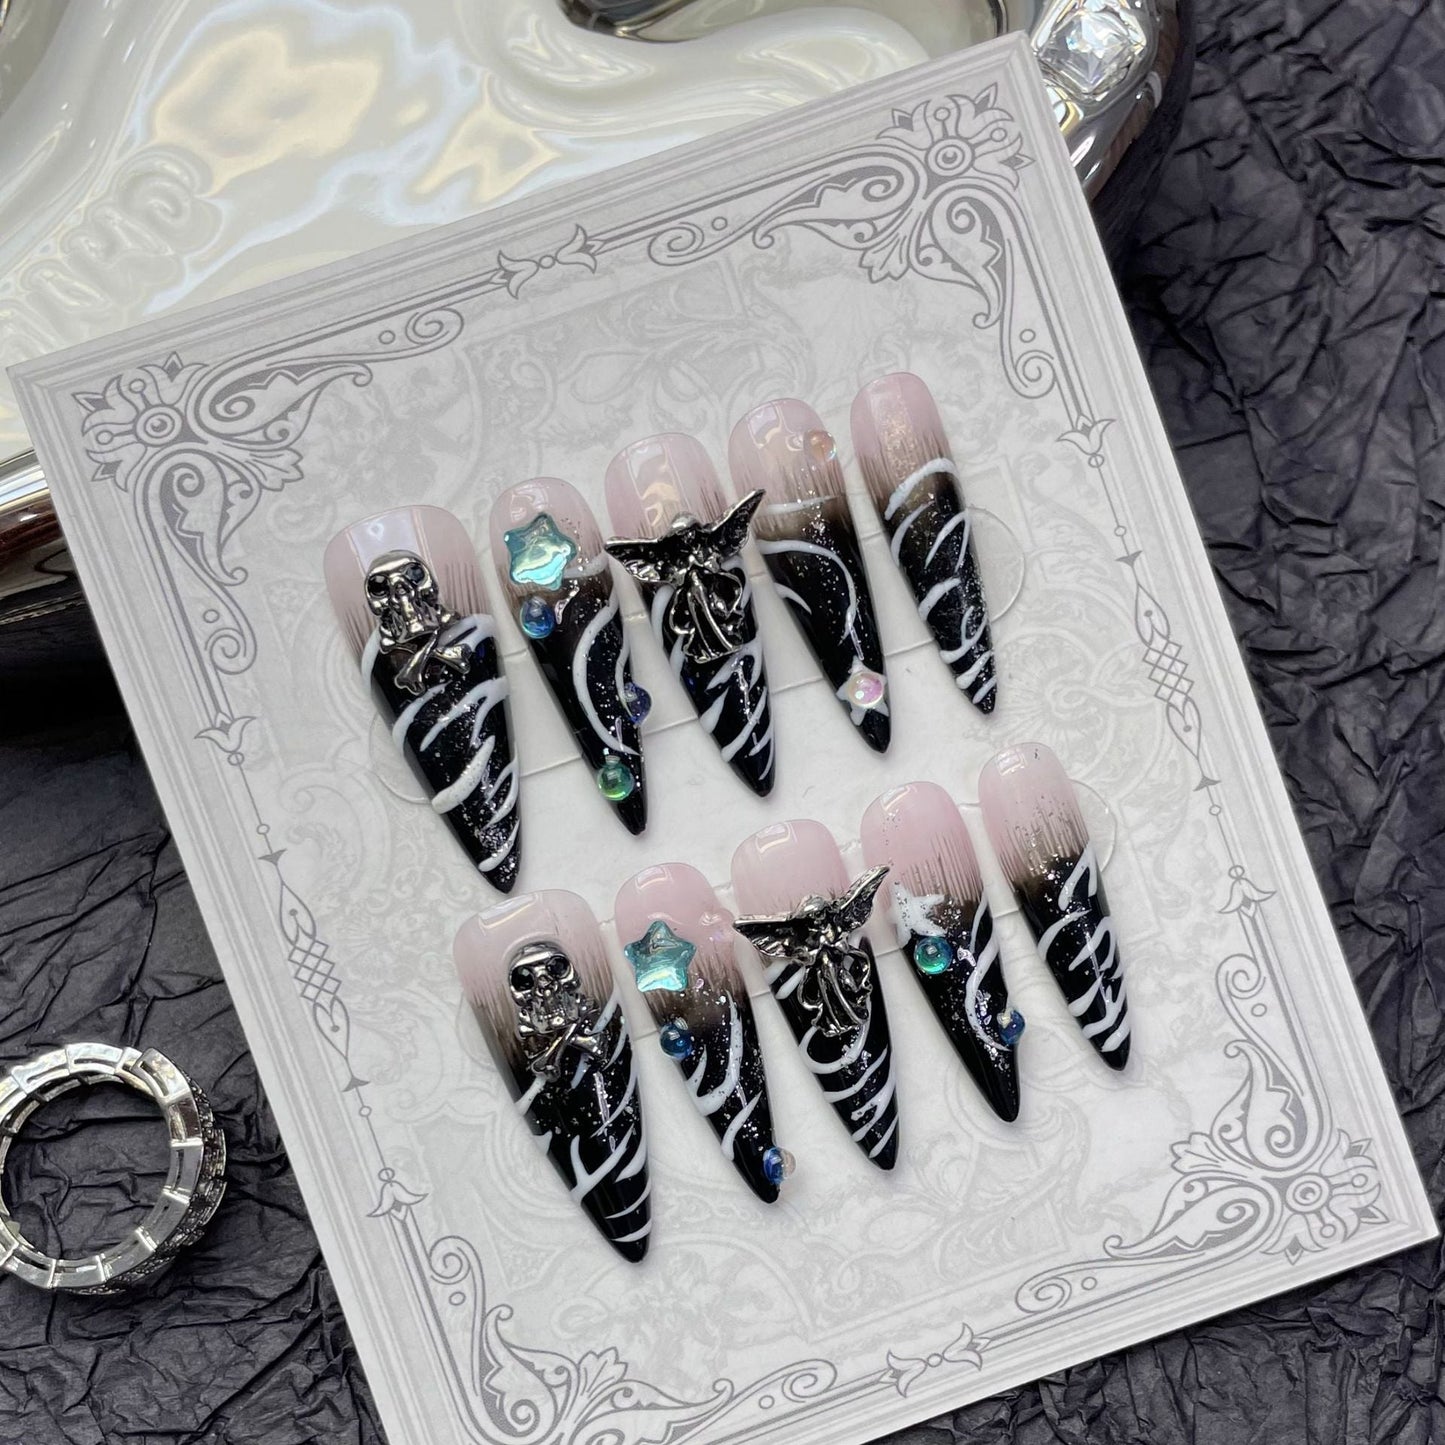 1251 Angels and demons style press on nails 100% handmade false nails black